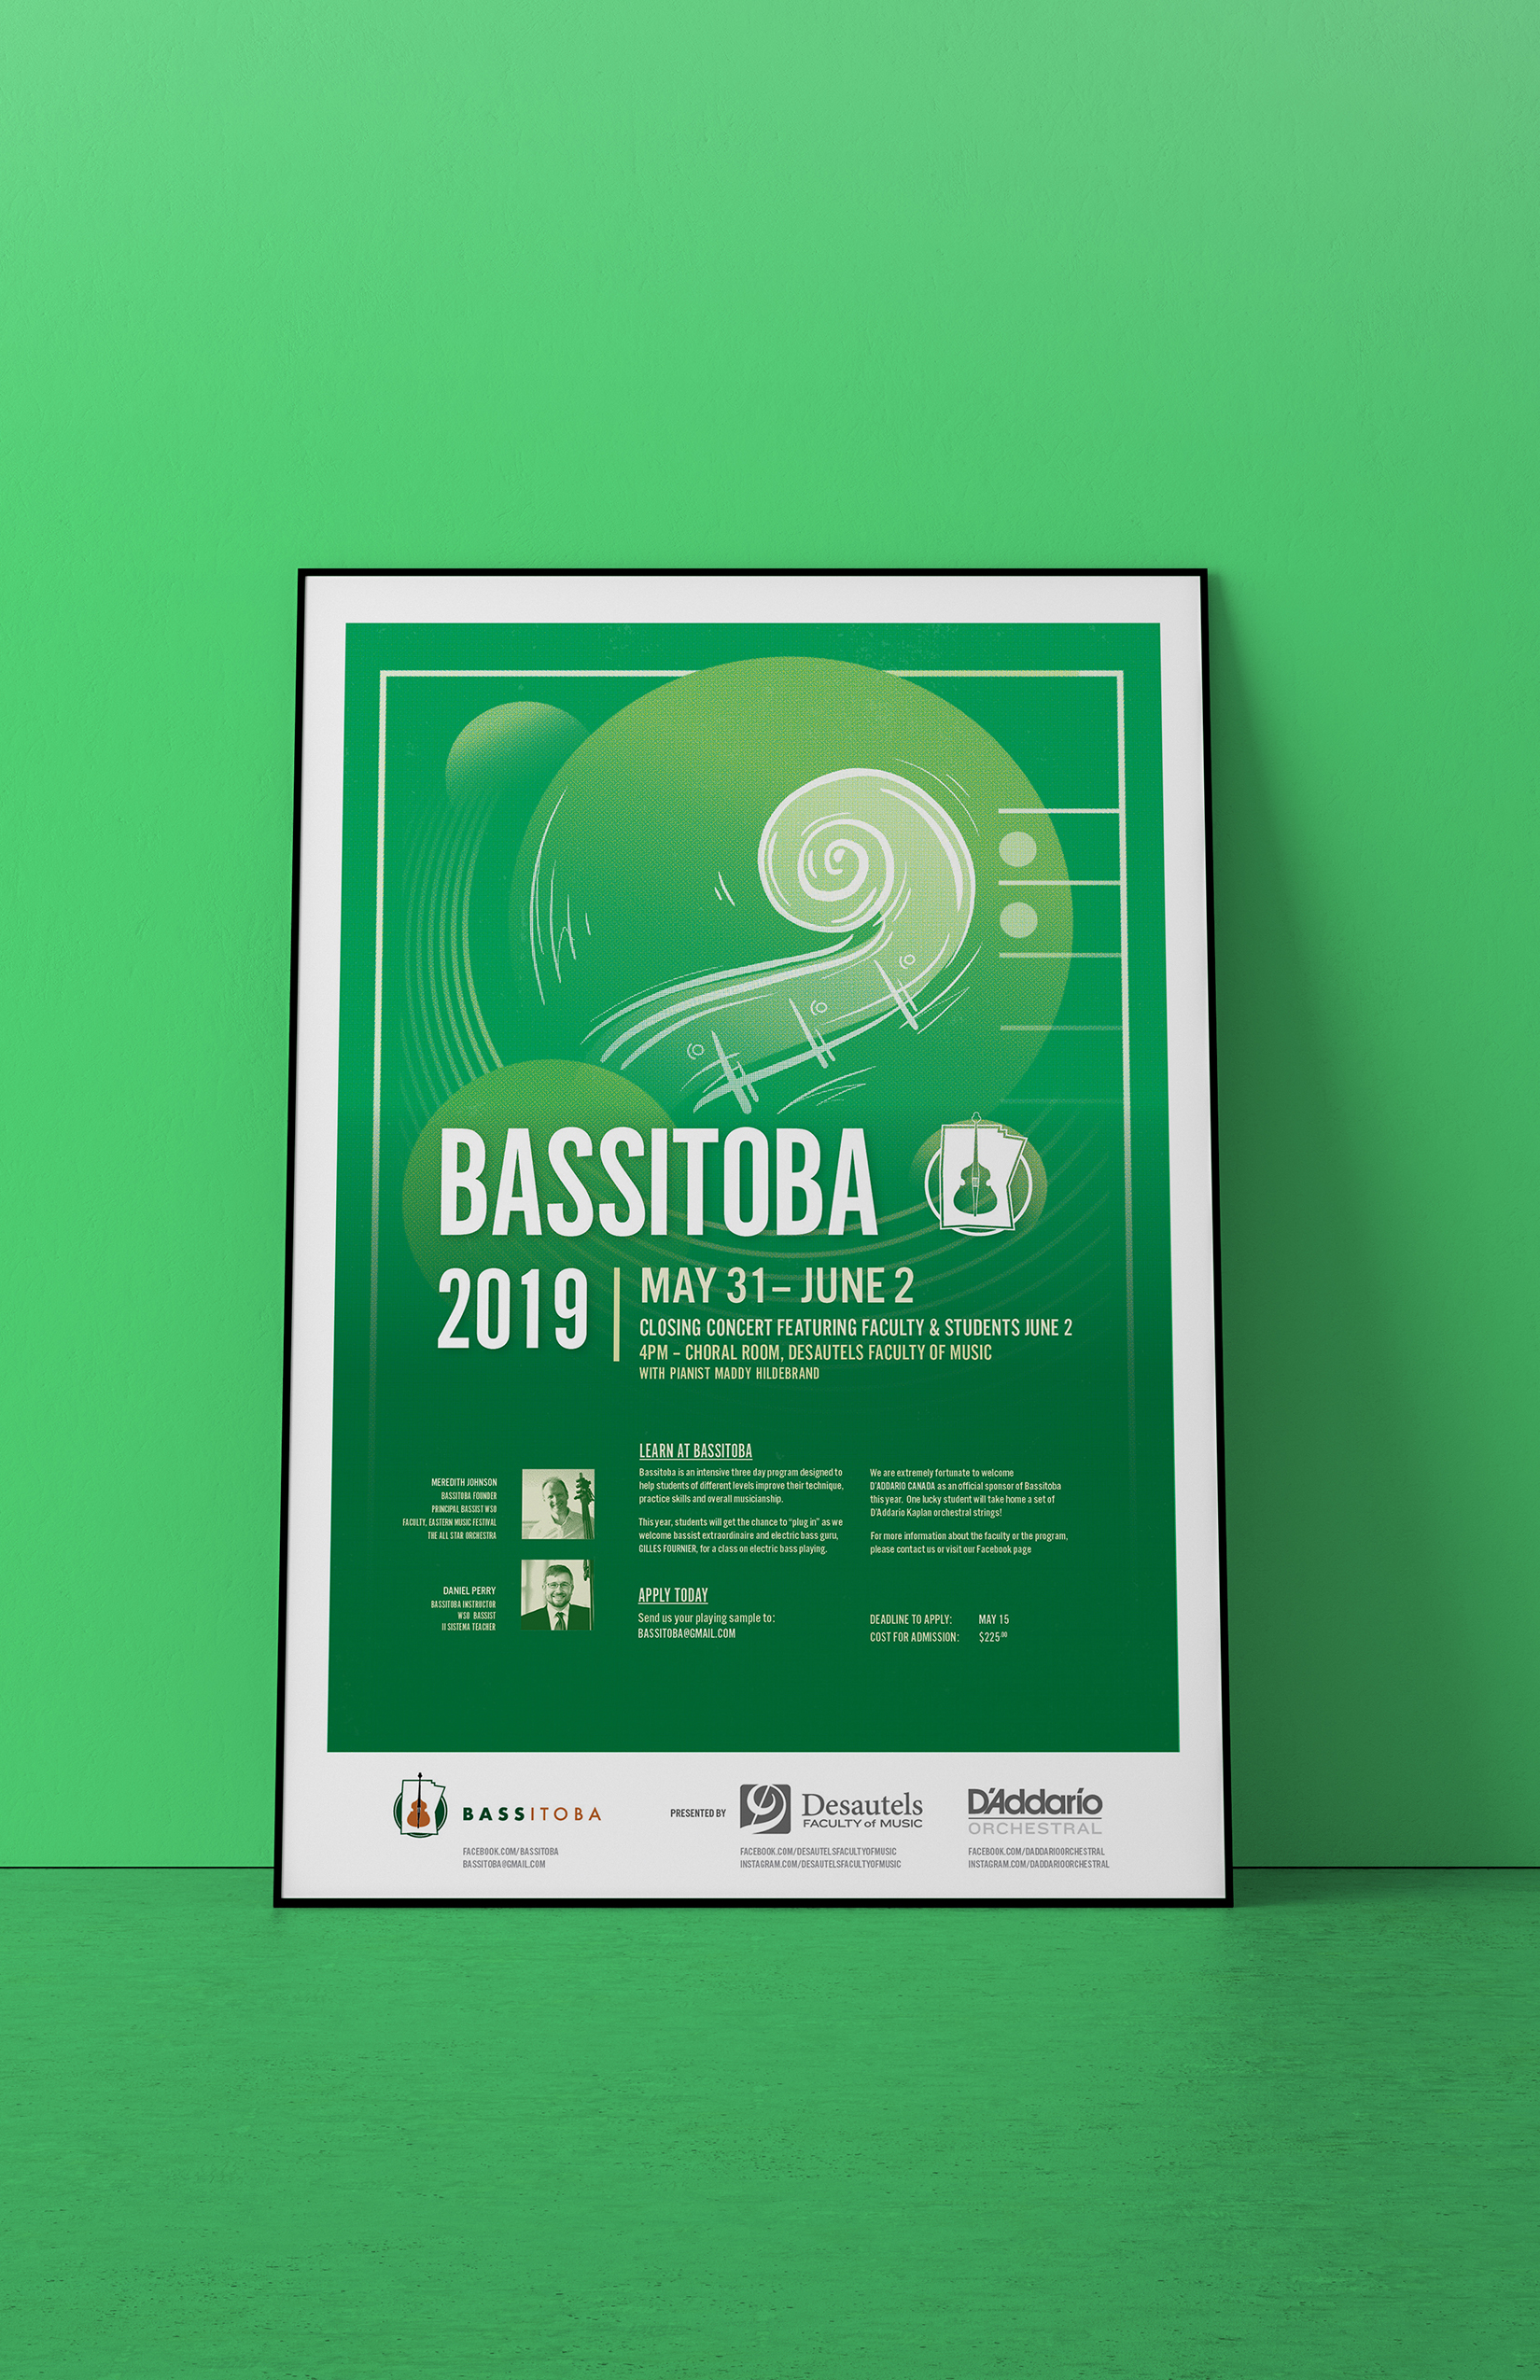 Bassitoba 2019 poster mockup